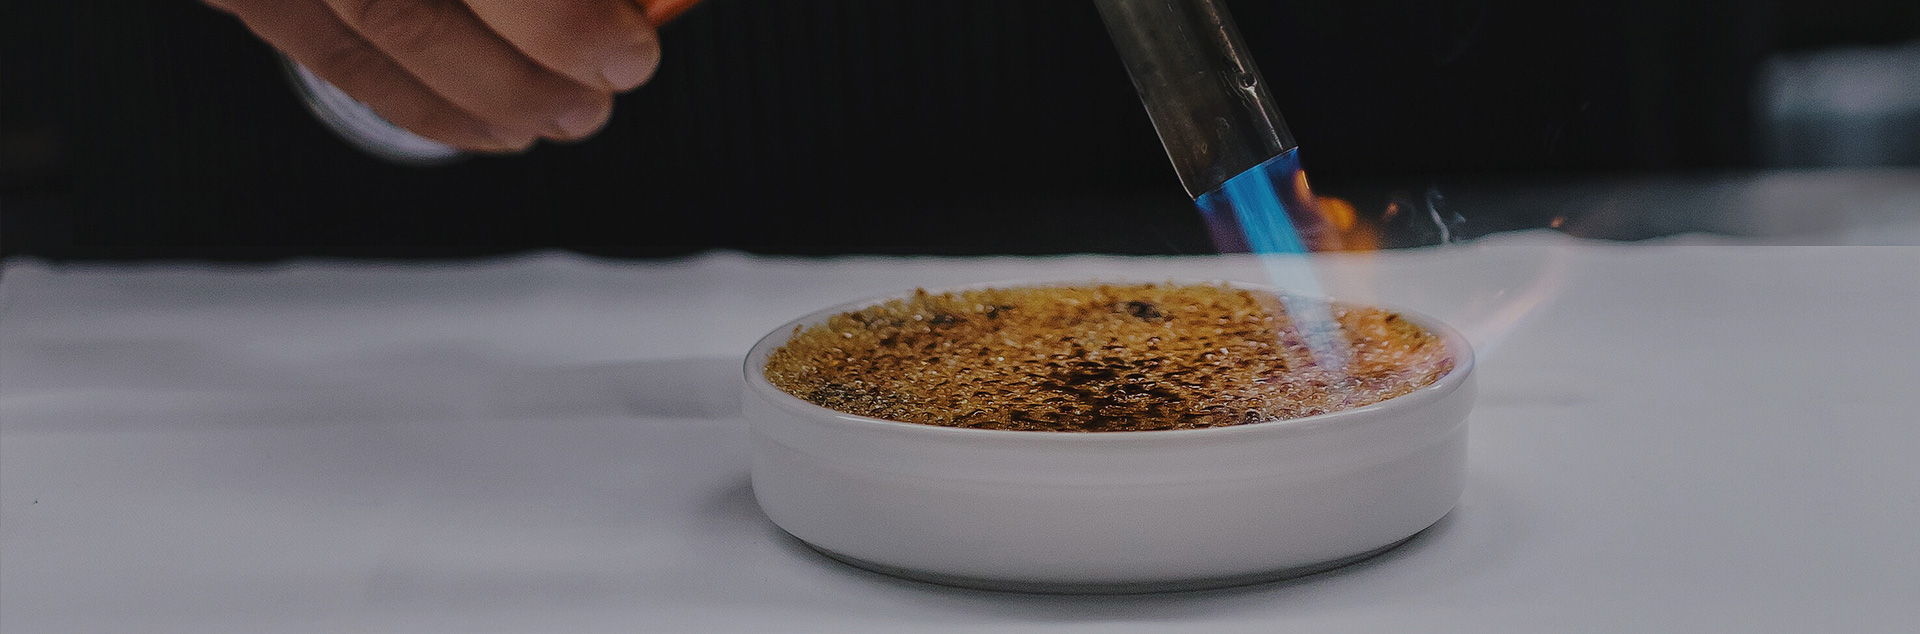 a creme brulee being prepared